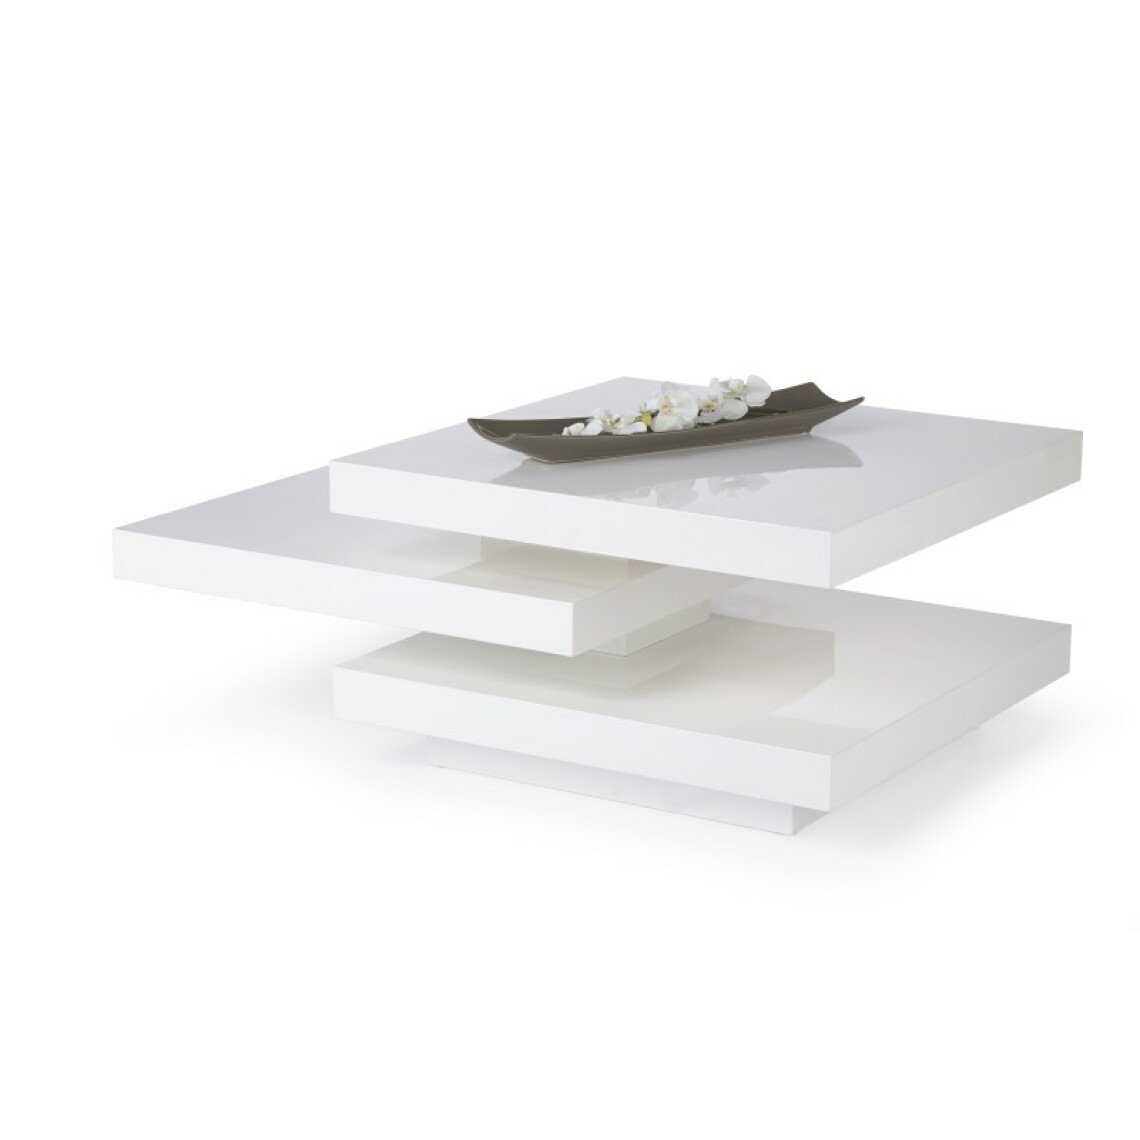 Carellia - Table basse design 80 cm x 80 cm x 45 cm - Blanc - Tables basses